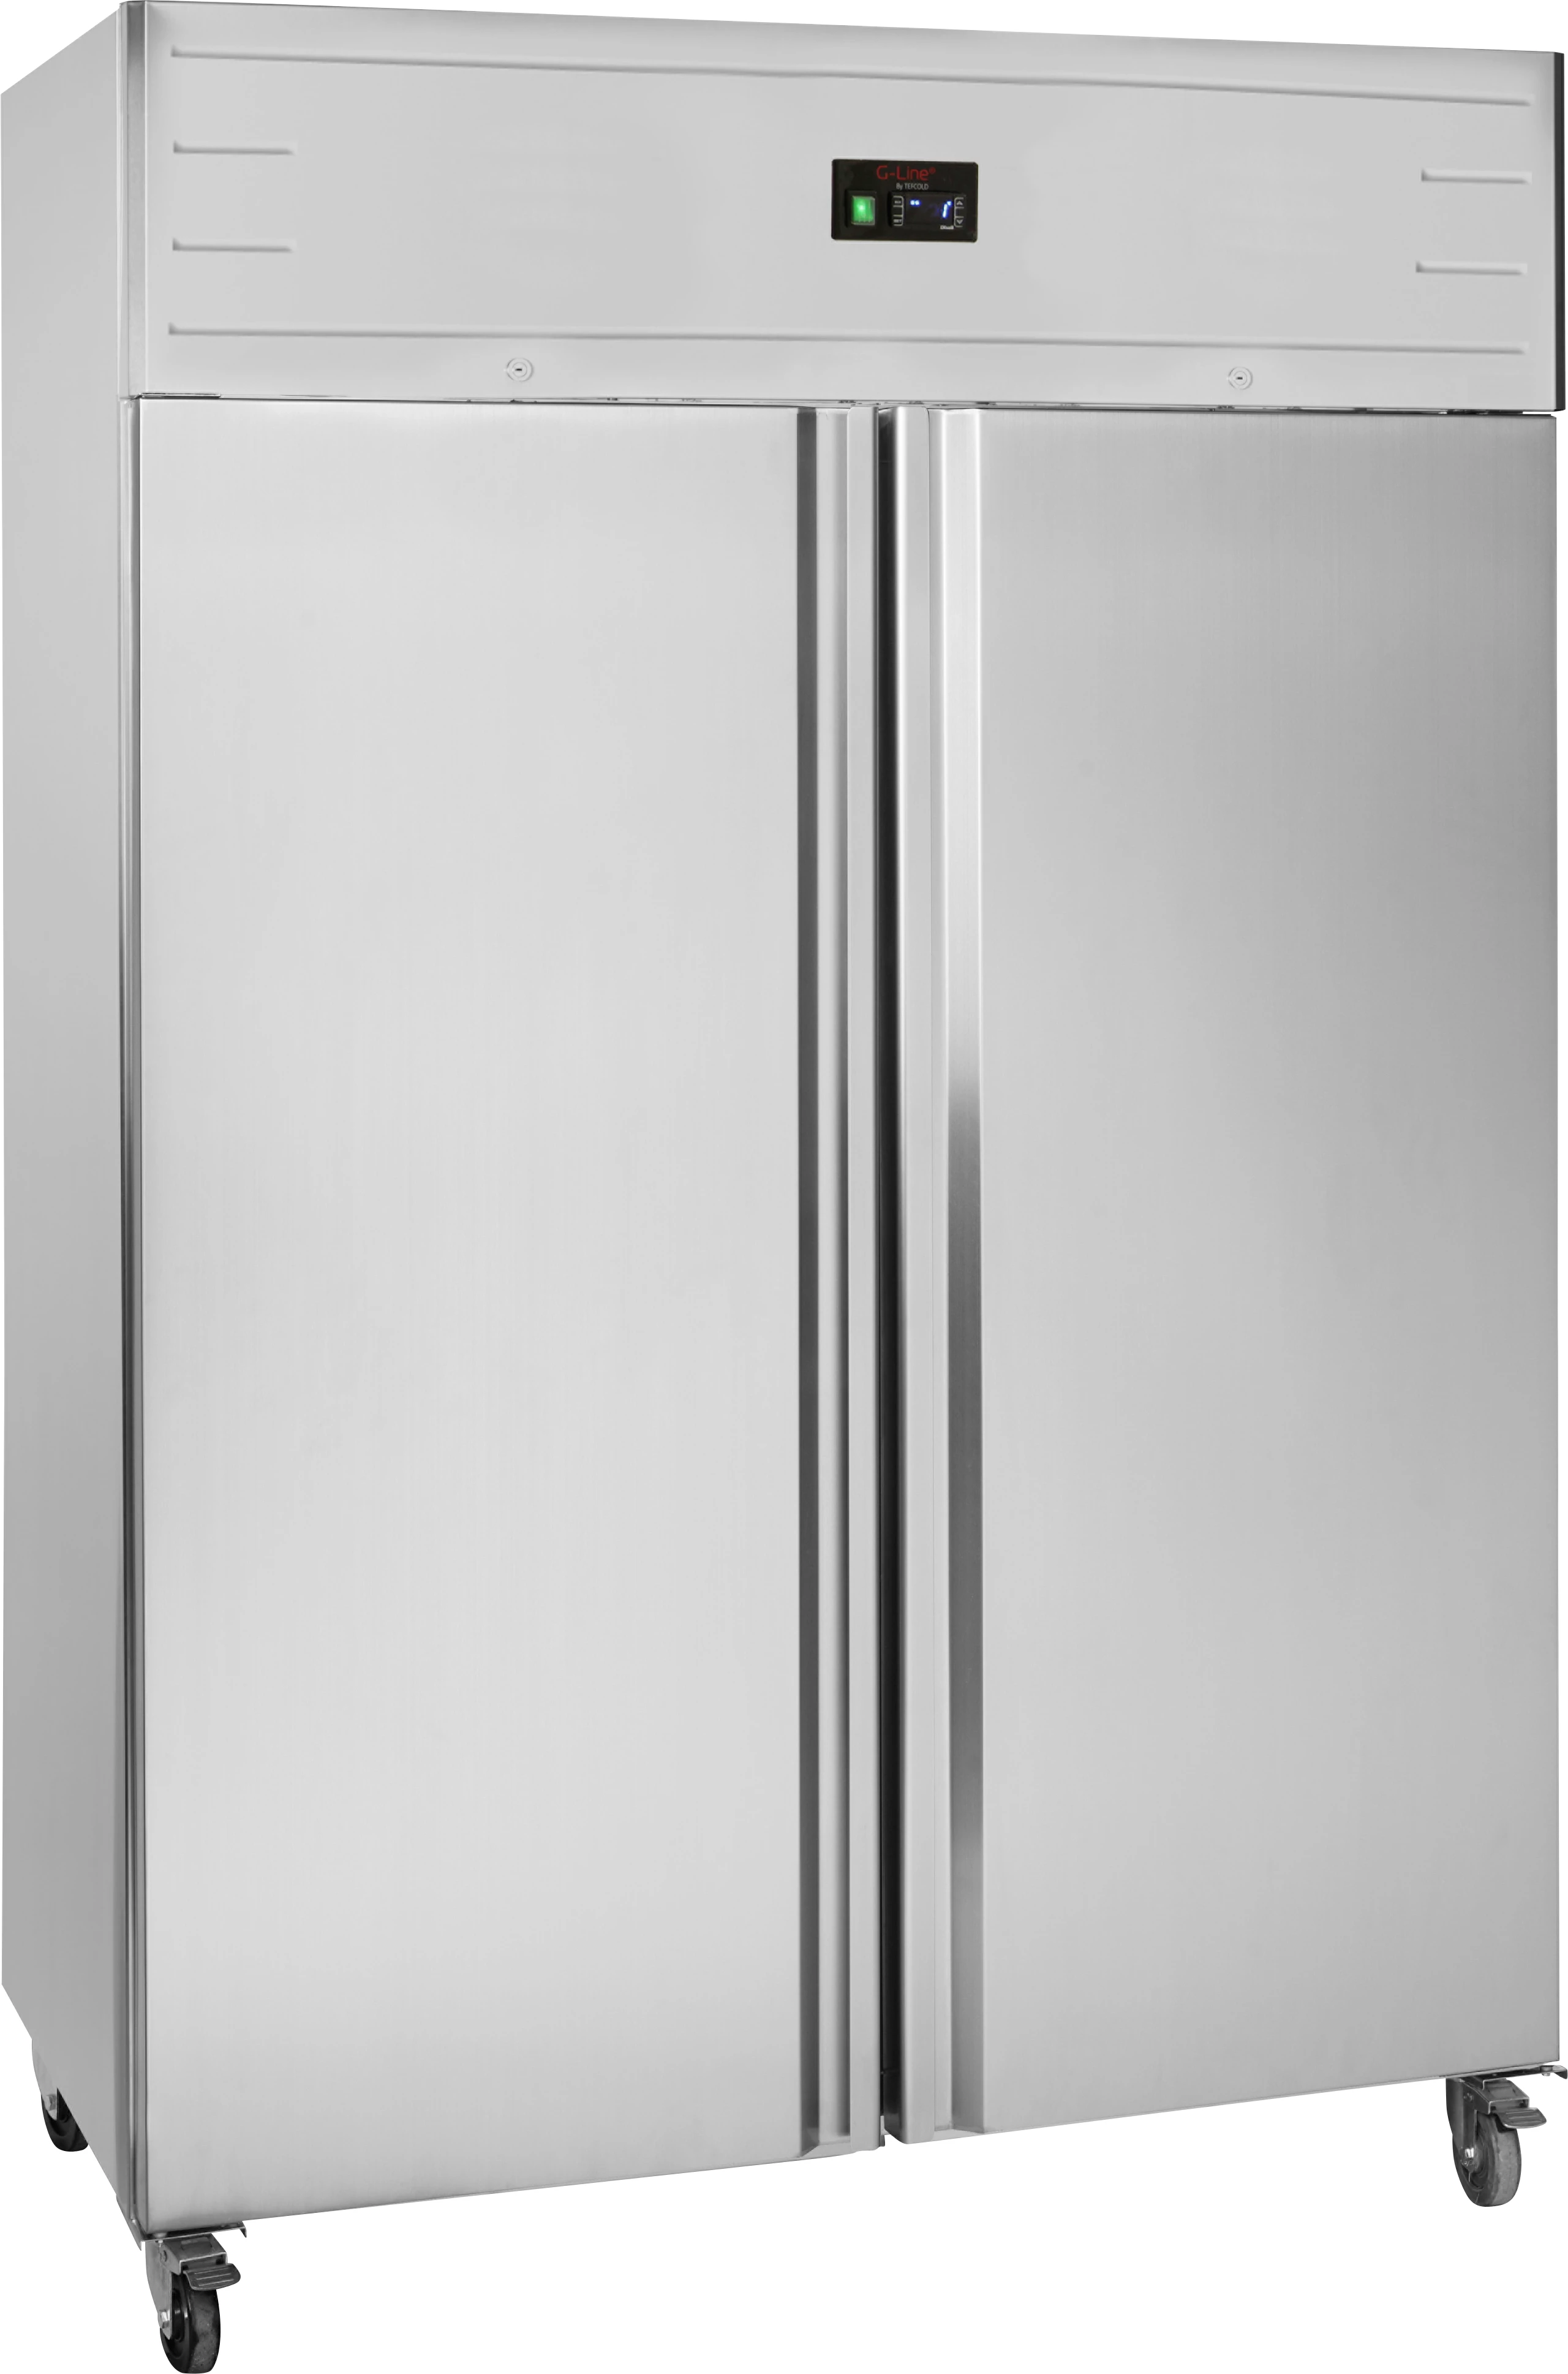 Tefcold GUC140 SS201 køleskab